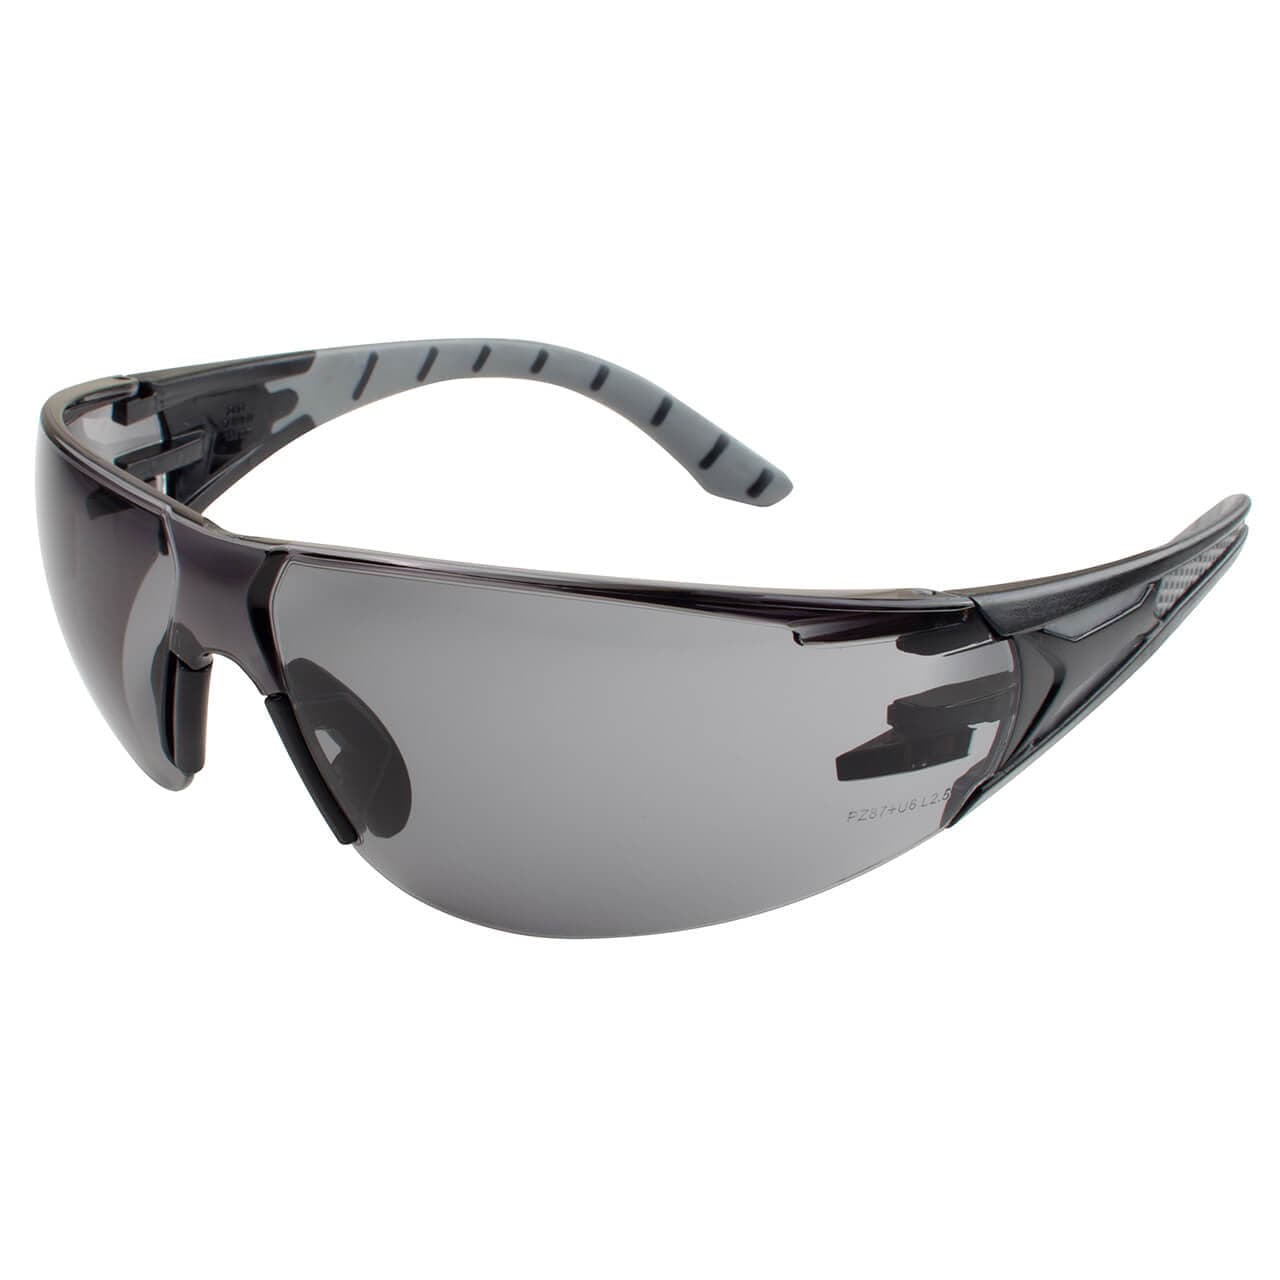 Metel M50 Safety Glasses with Gray Anti-Fog Lenses